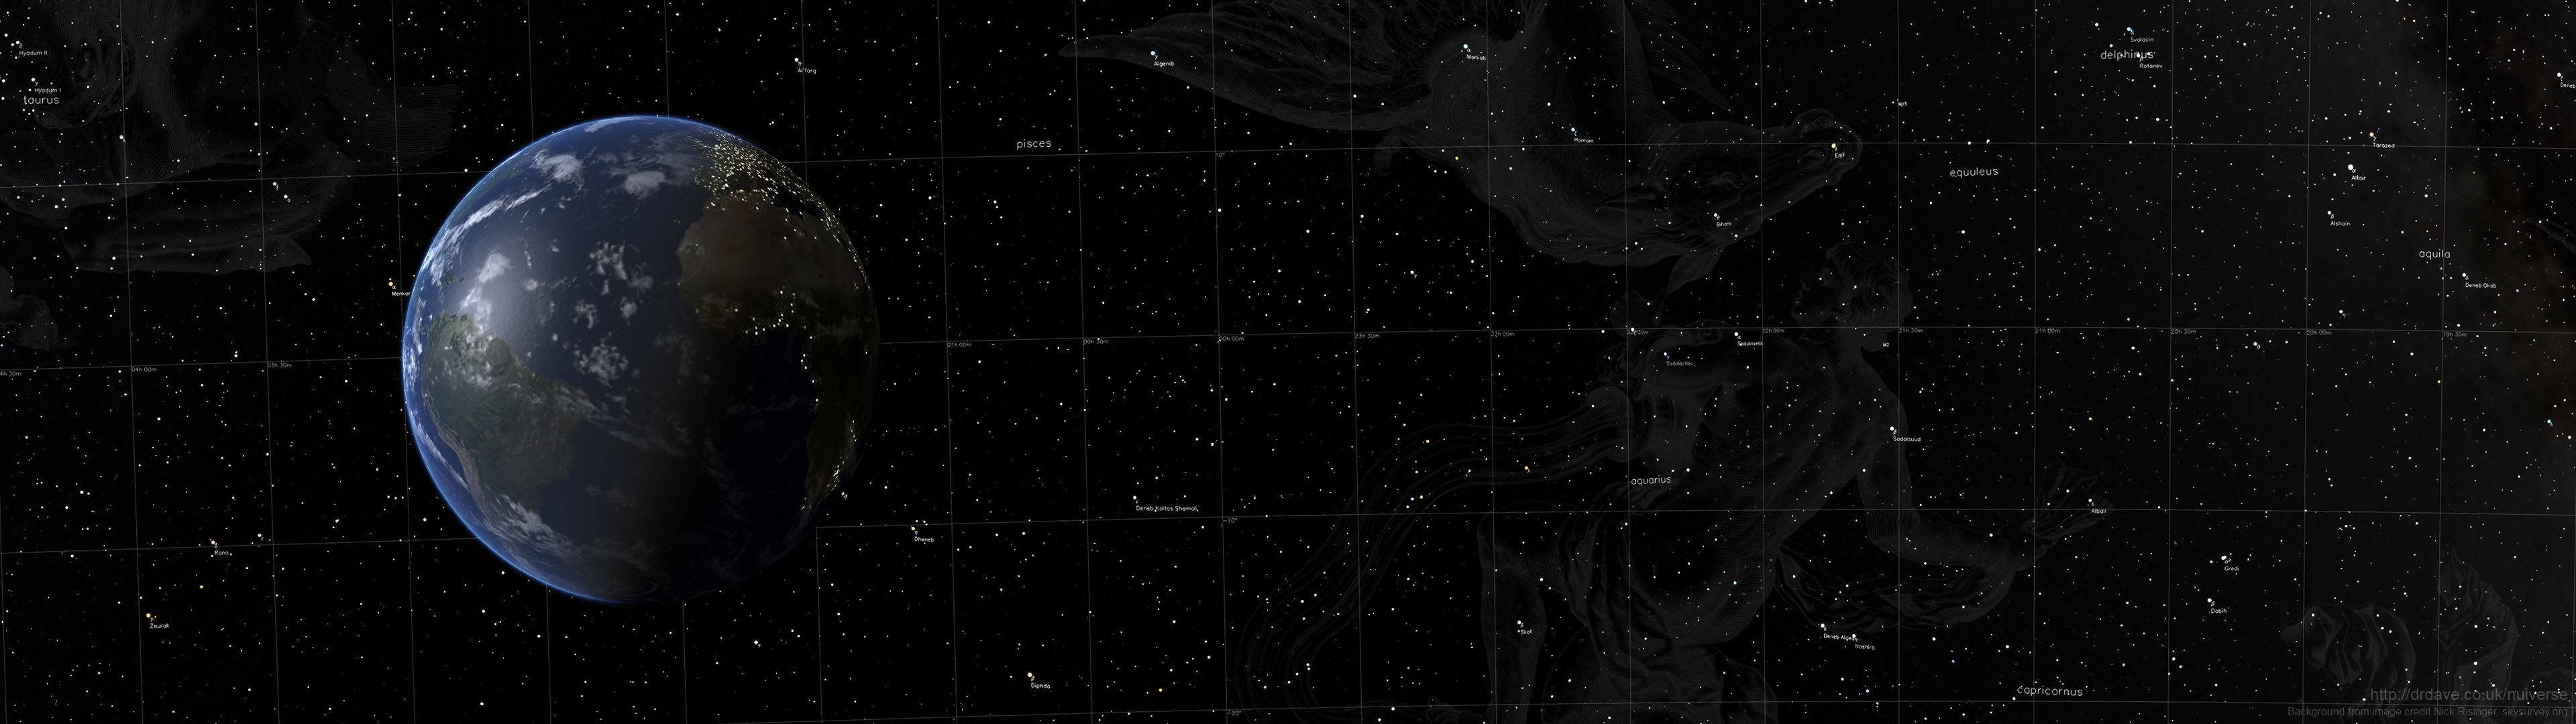 3840x1080 Hd Dual Monitor Celestial Earth Wallpaper